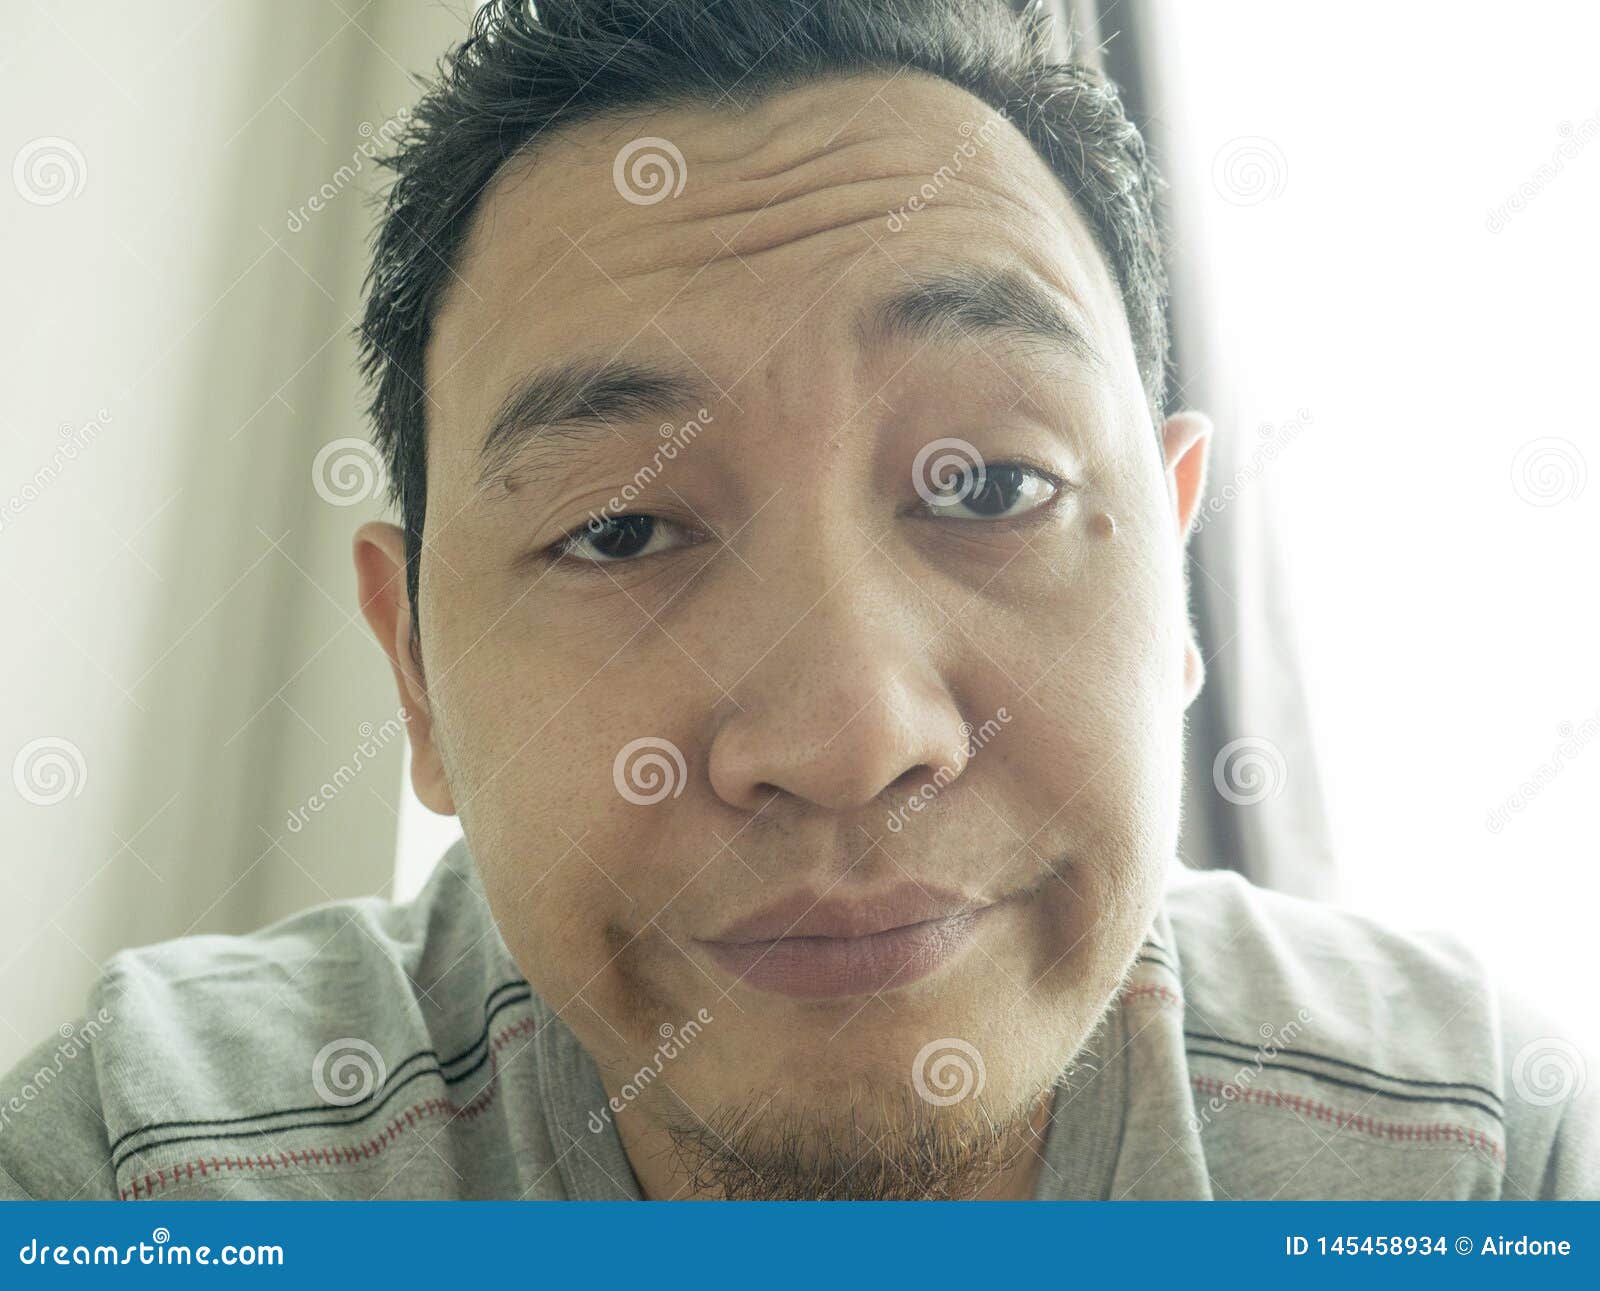 asian humiliation selfie sex photo